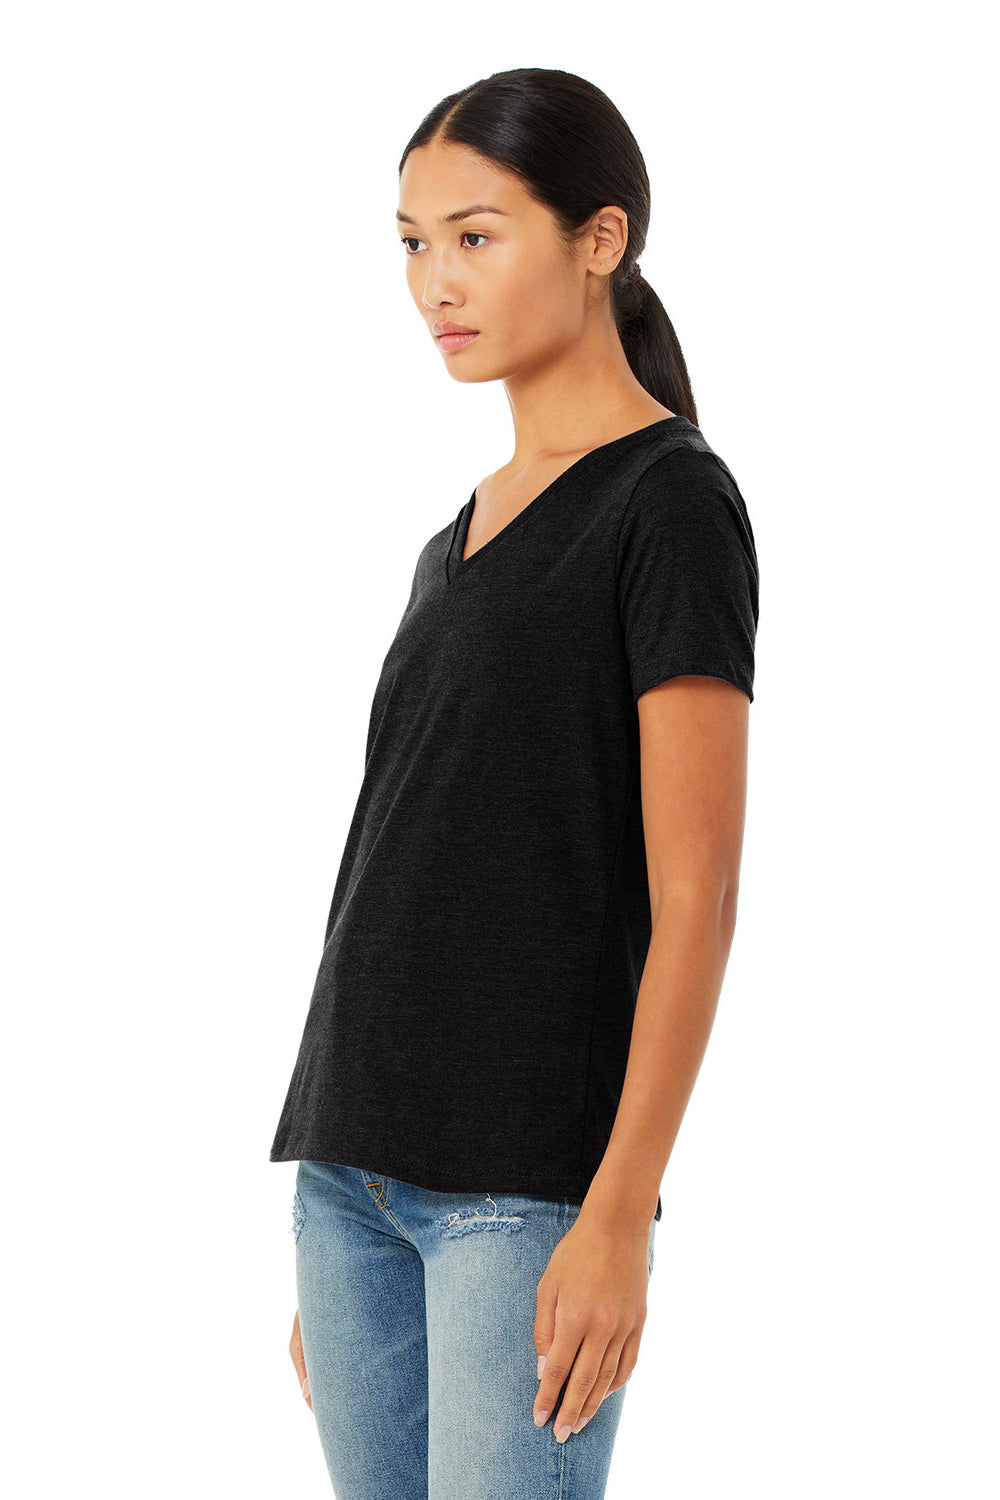 Bella + Canvas BC6405CVC Womens CVC Short Sleeve V-Neck T-Shirt Solid Black Model 3Q